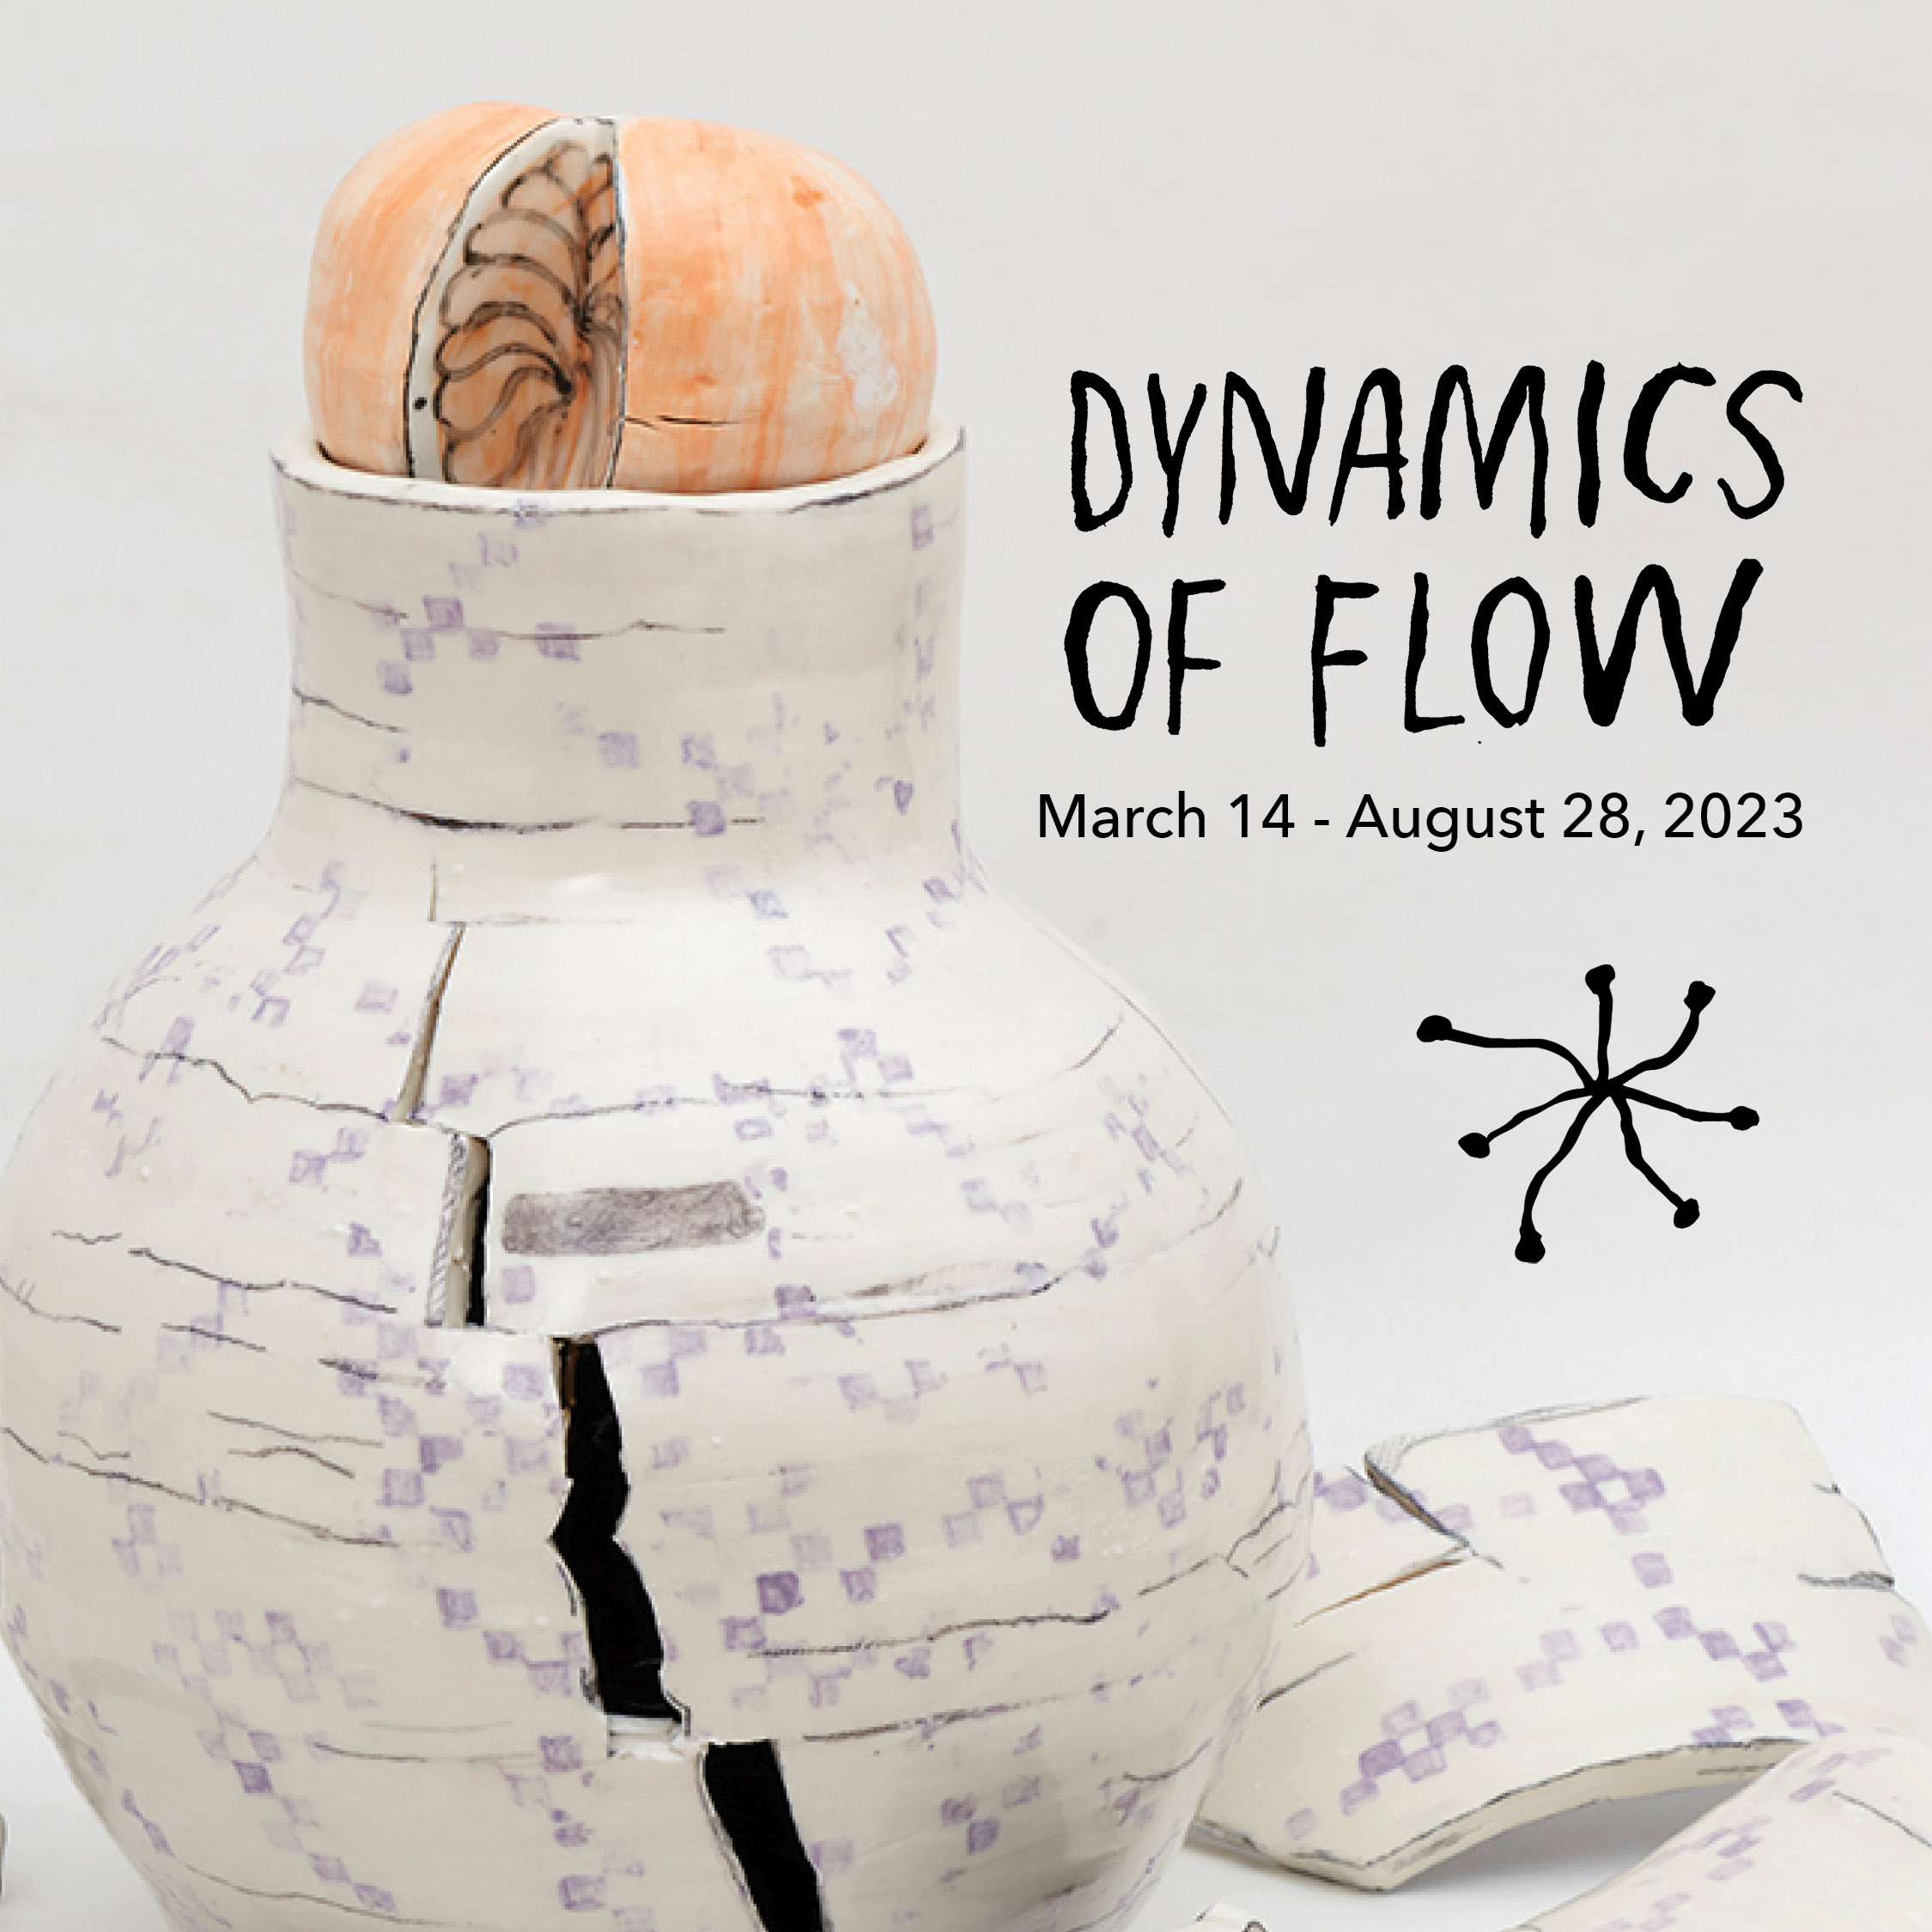 Dynamics of Flow